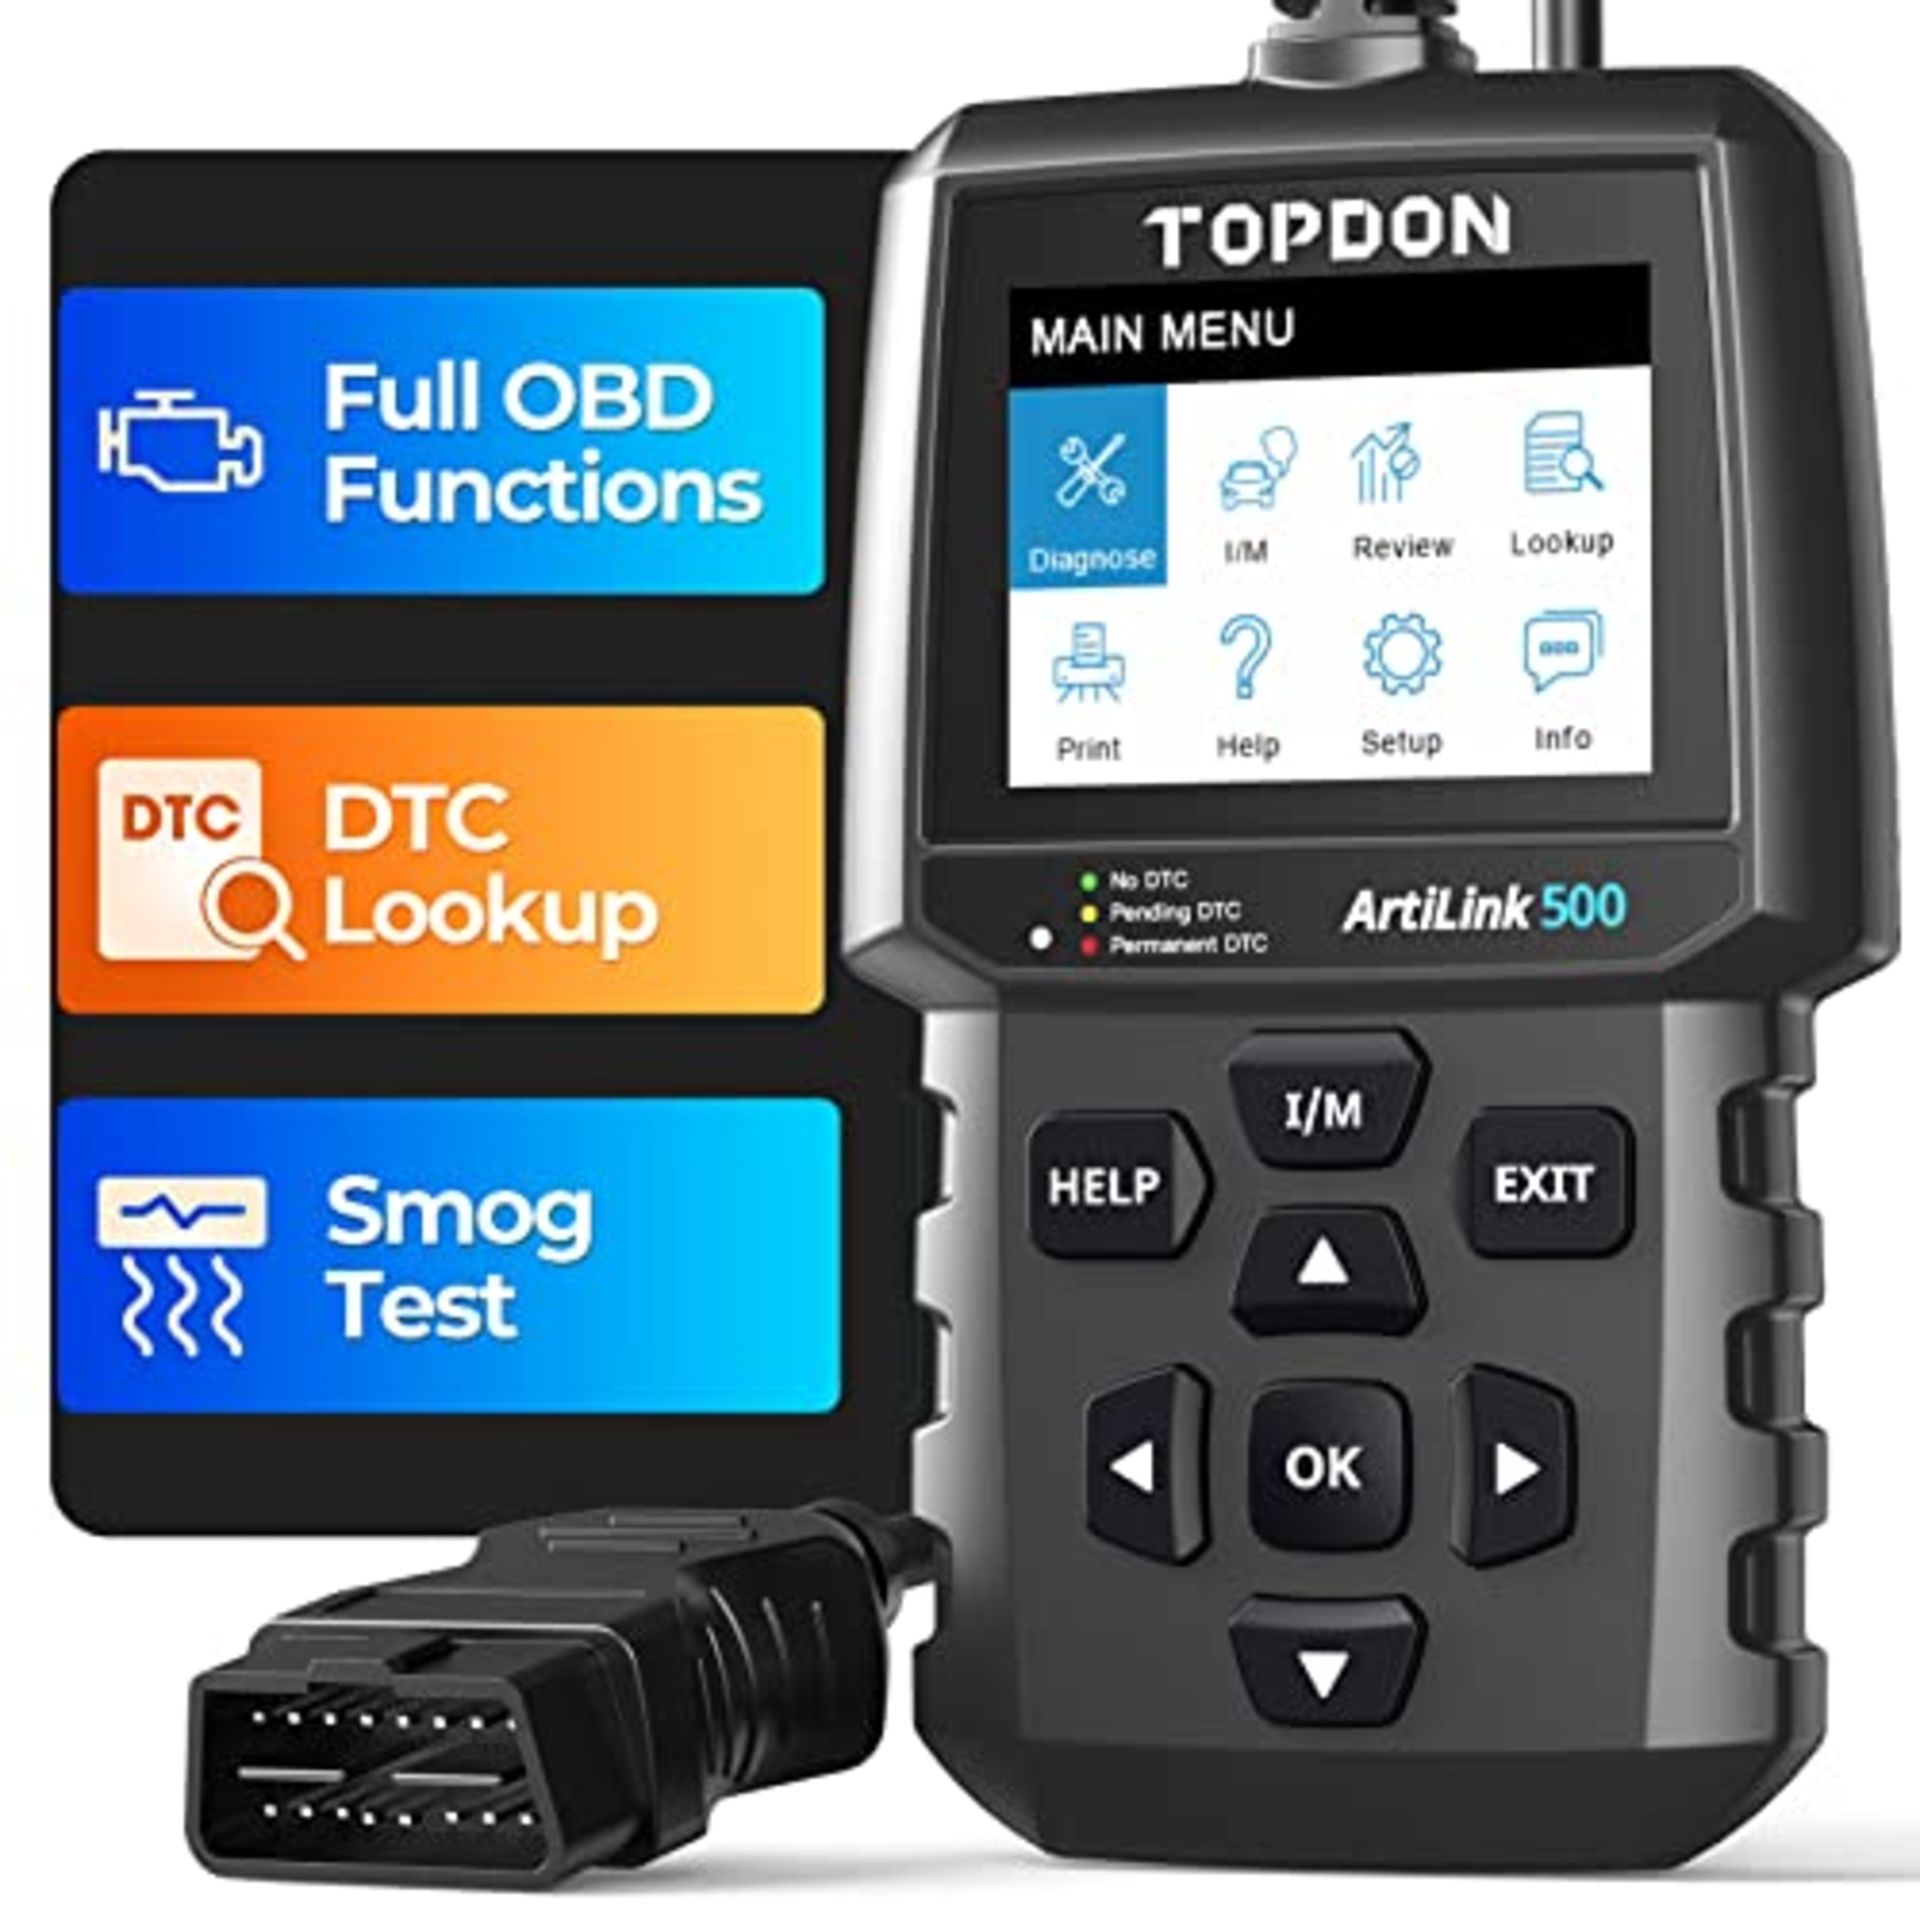 TOPDON AL500 OBD2 Code Reader with Full OBD2 Functions, Universal Car Diagnostic Tool